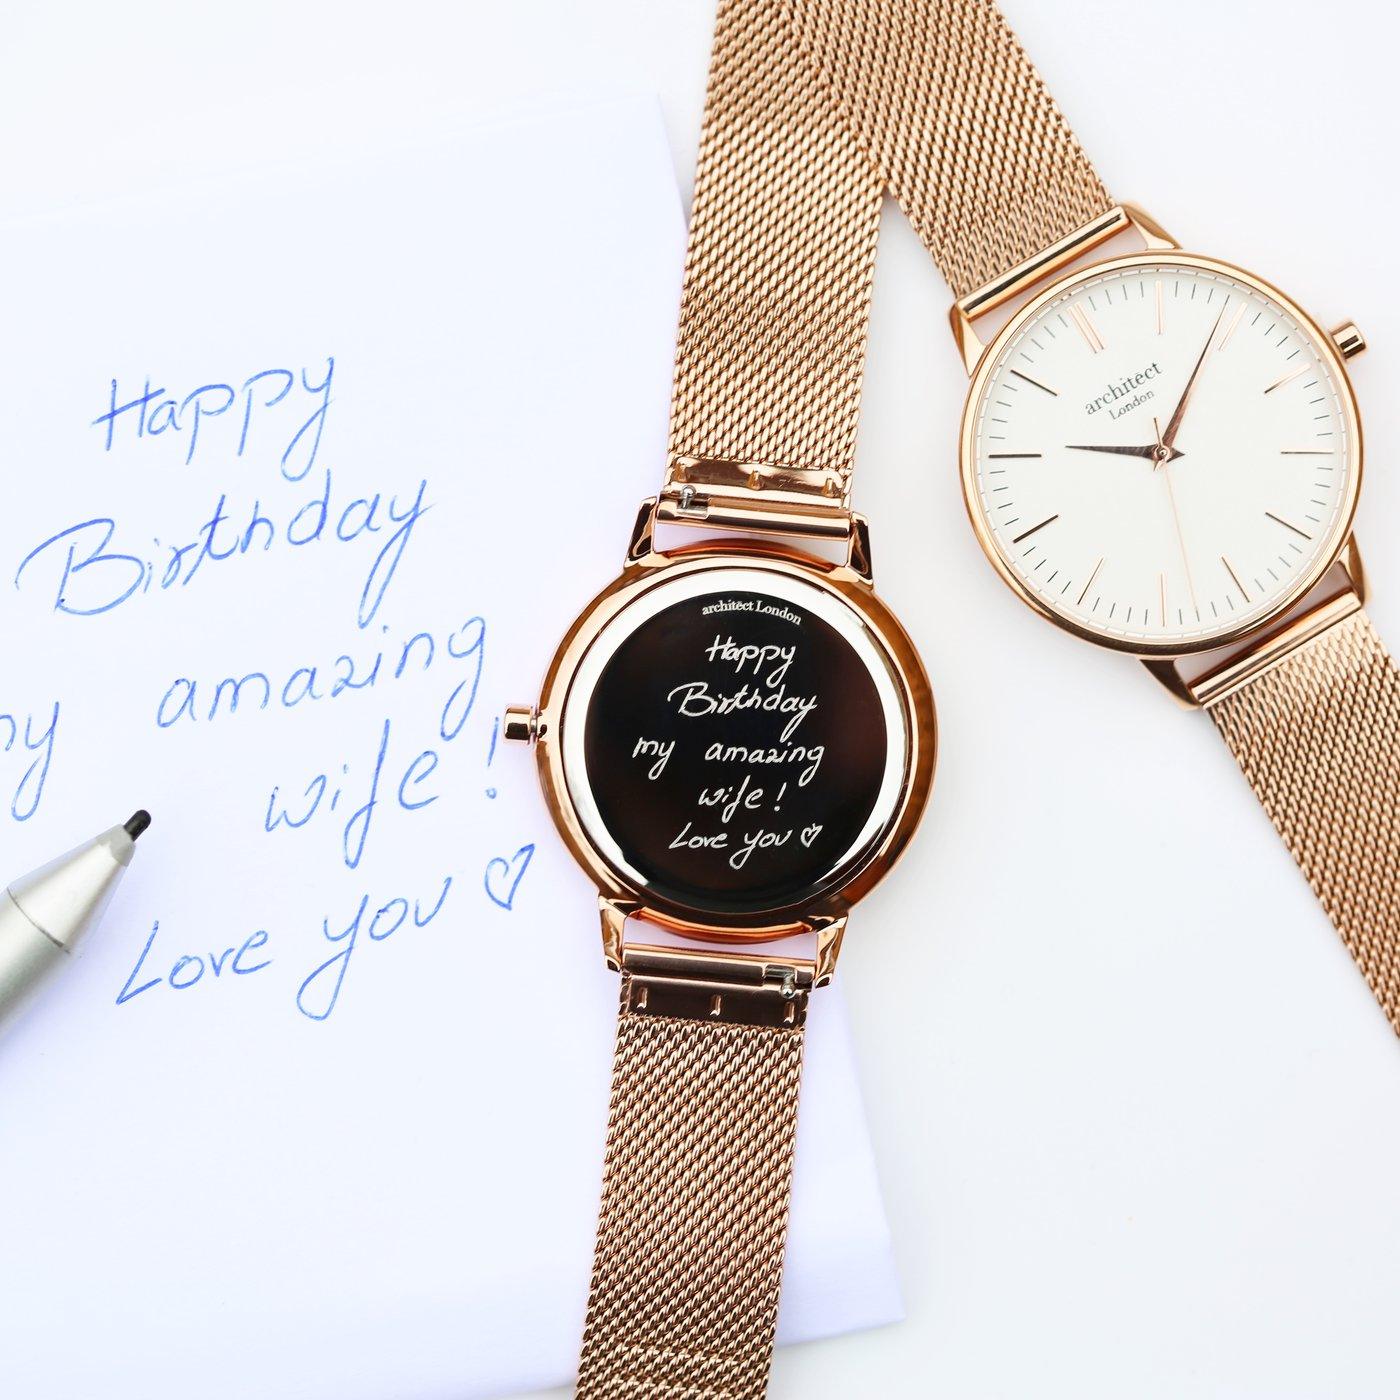 Own Handwriting Engraving Architēct Blanc Ladies Watch + Rose Gold Mesh Strap - Shop Personalised Gifts